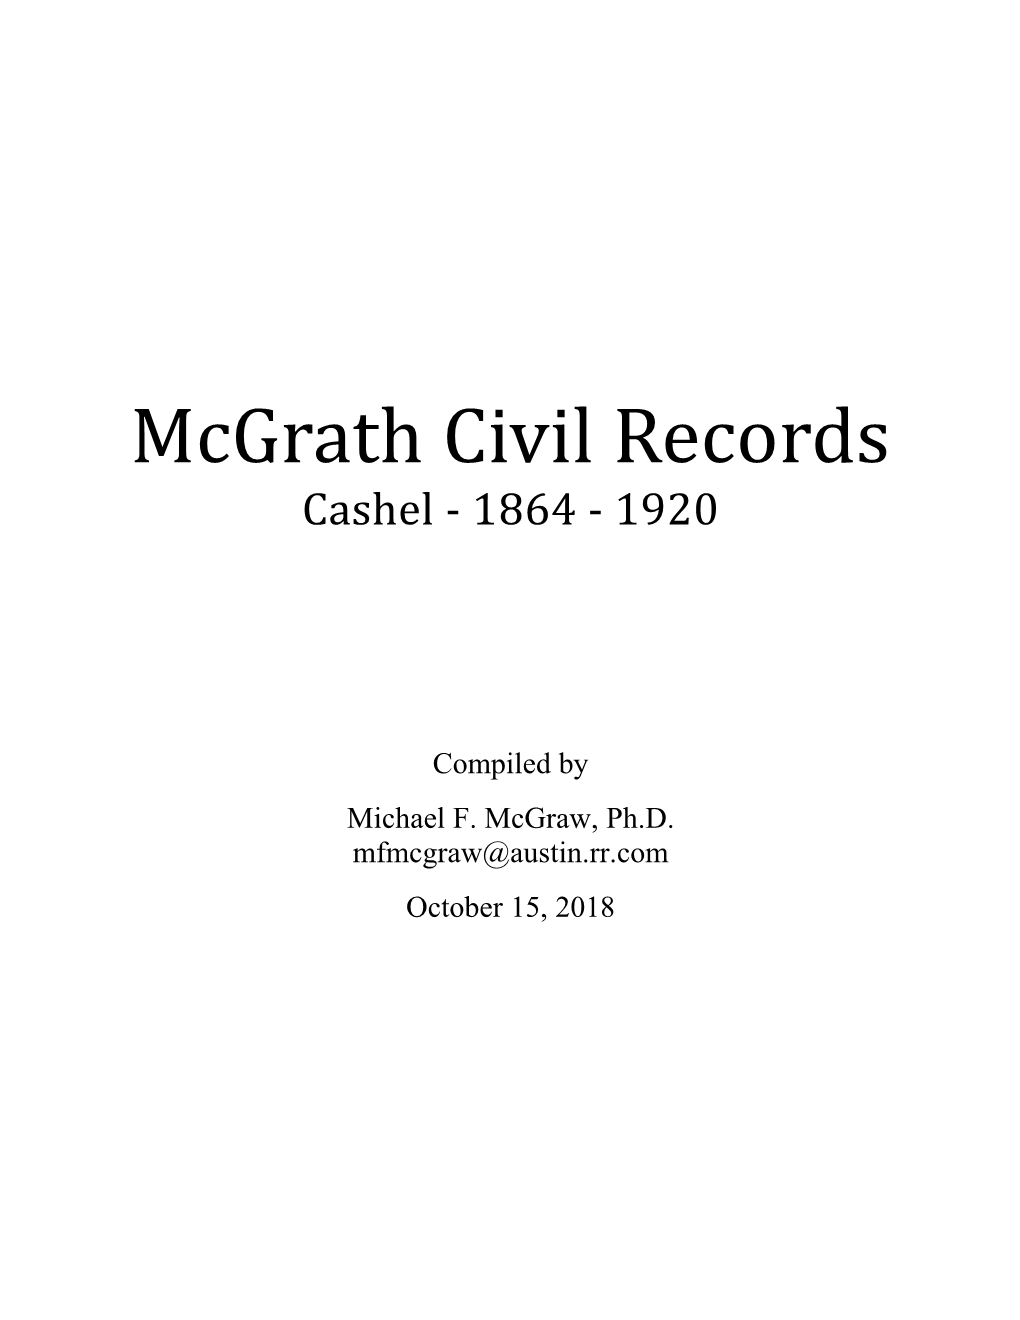 Mcgrath Civil Records 10-15-18A Cashel